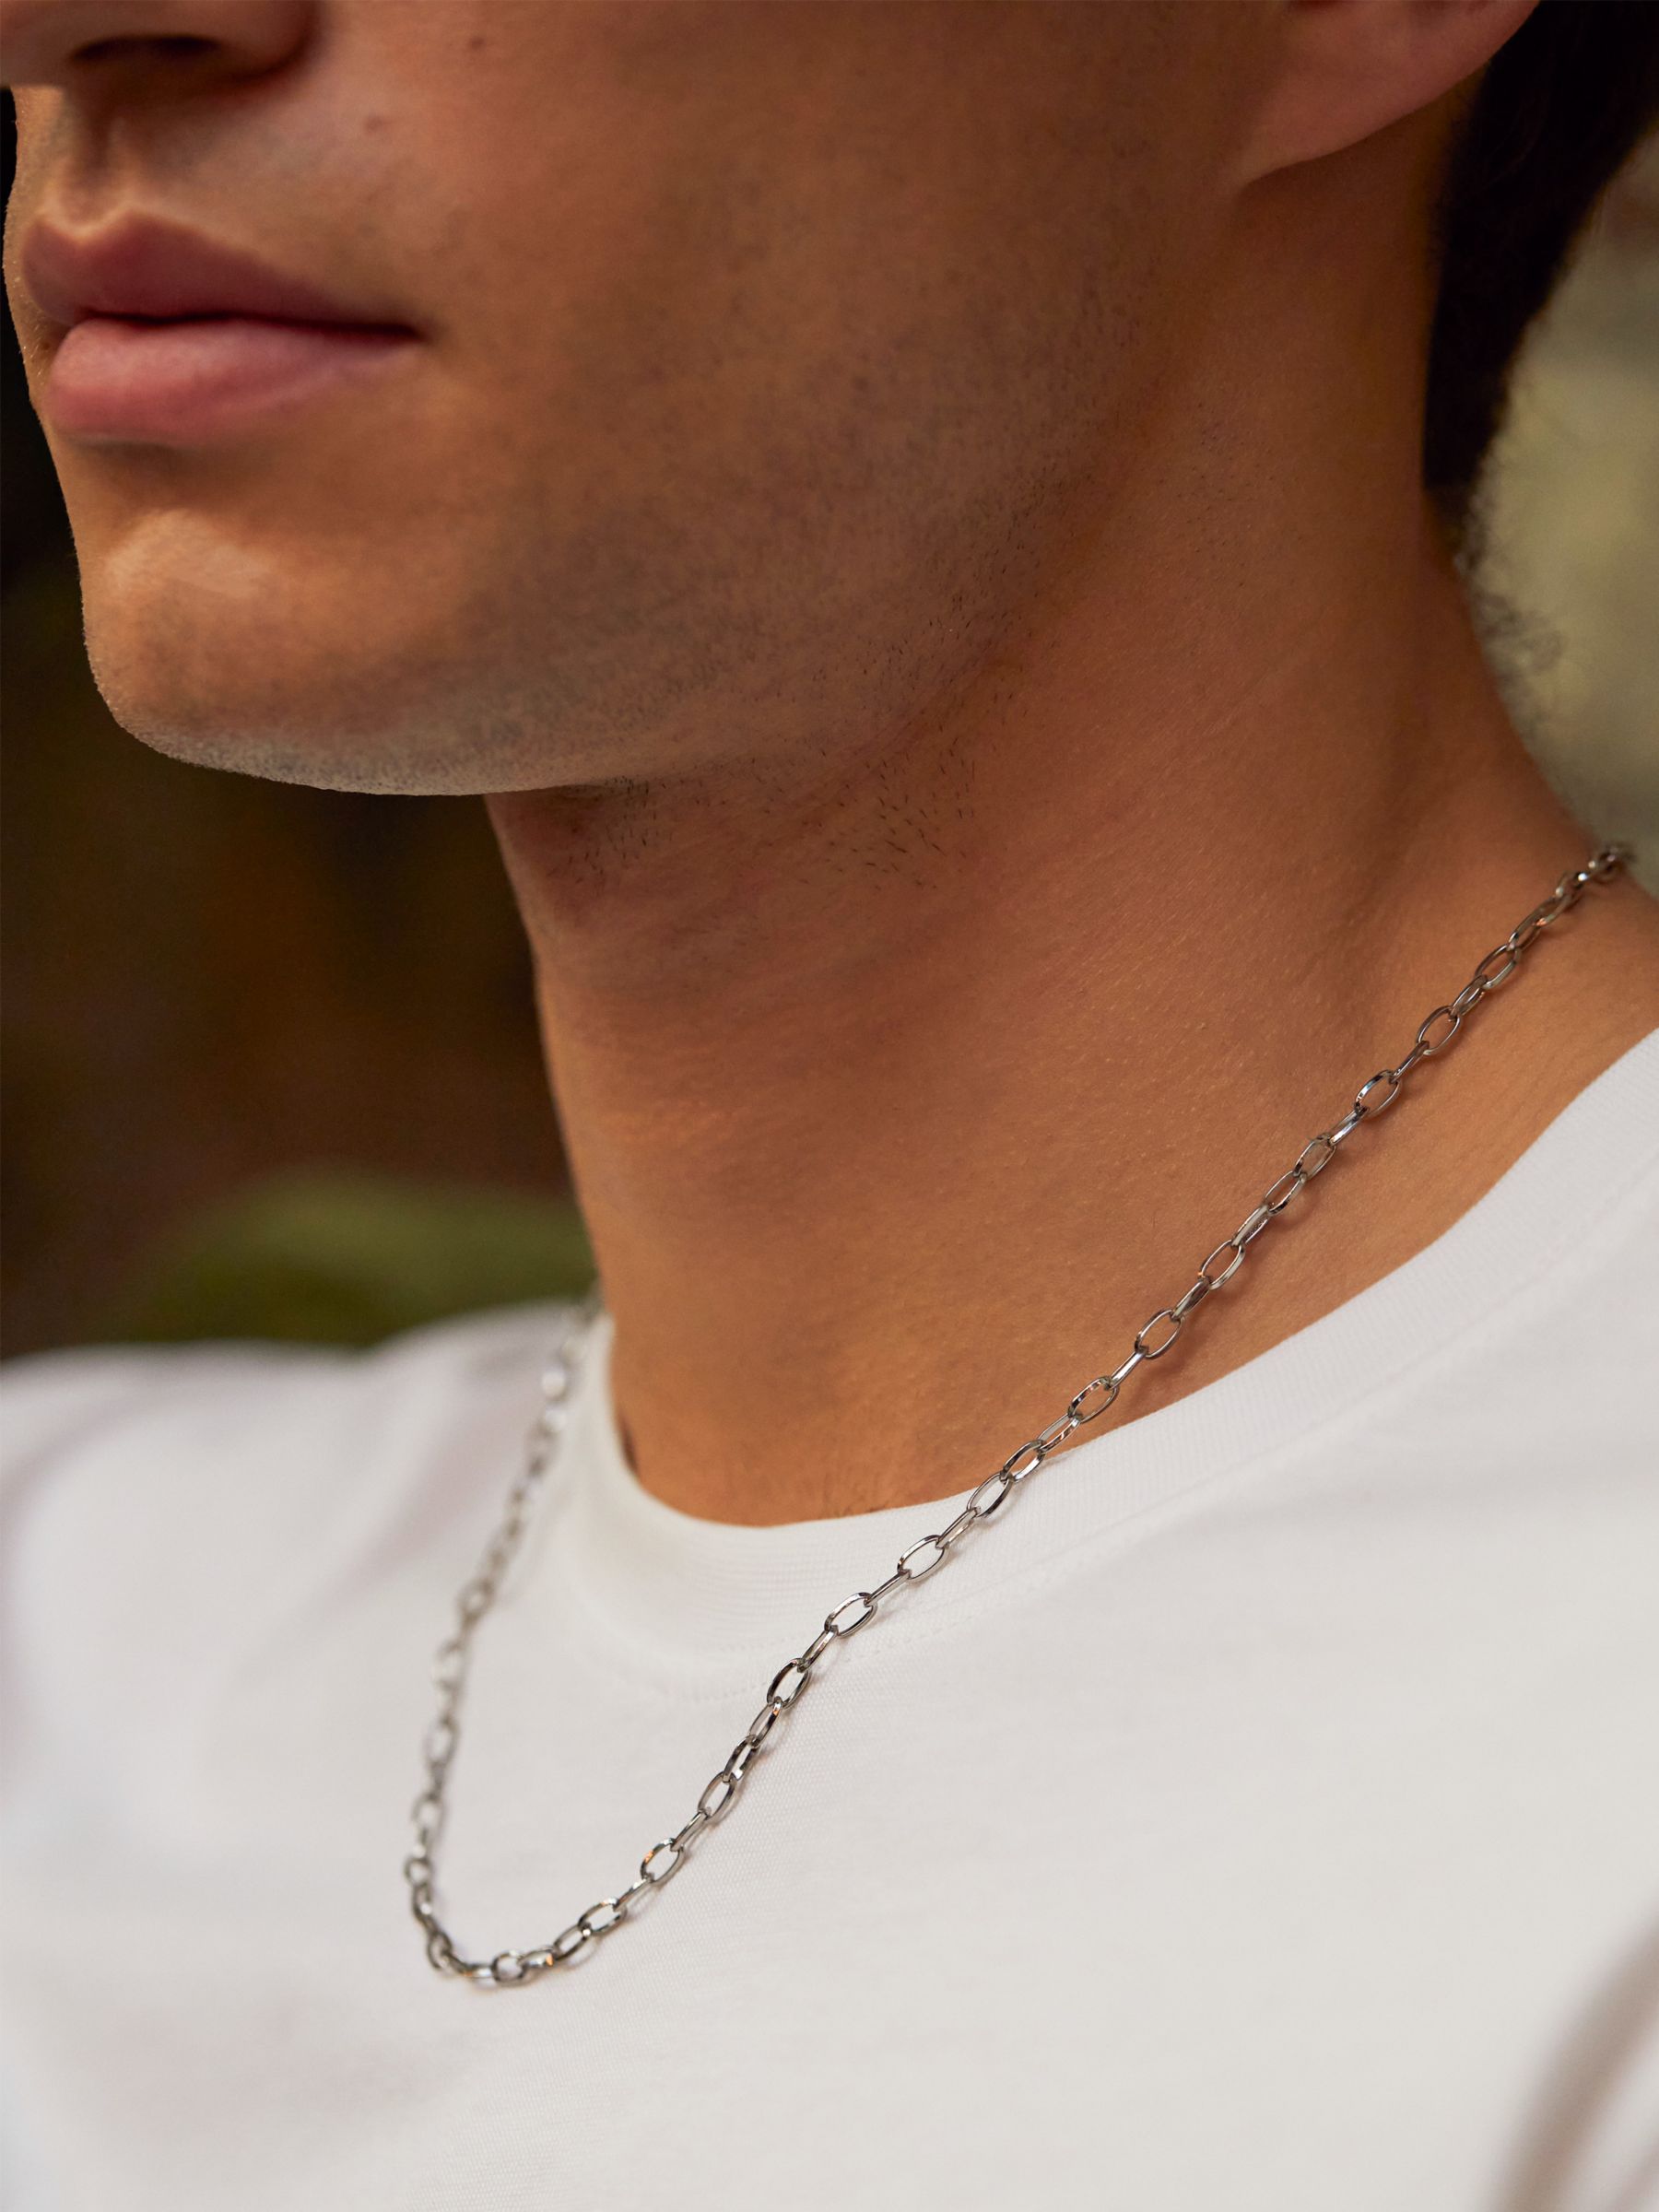 BARTLETT LONDON Men's Paperclip Chain Necklace, Silver